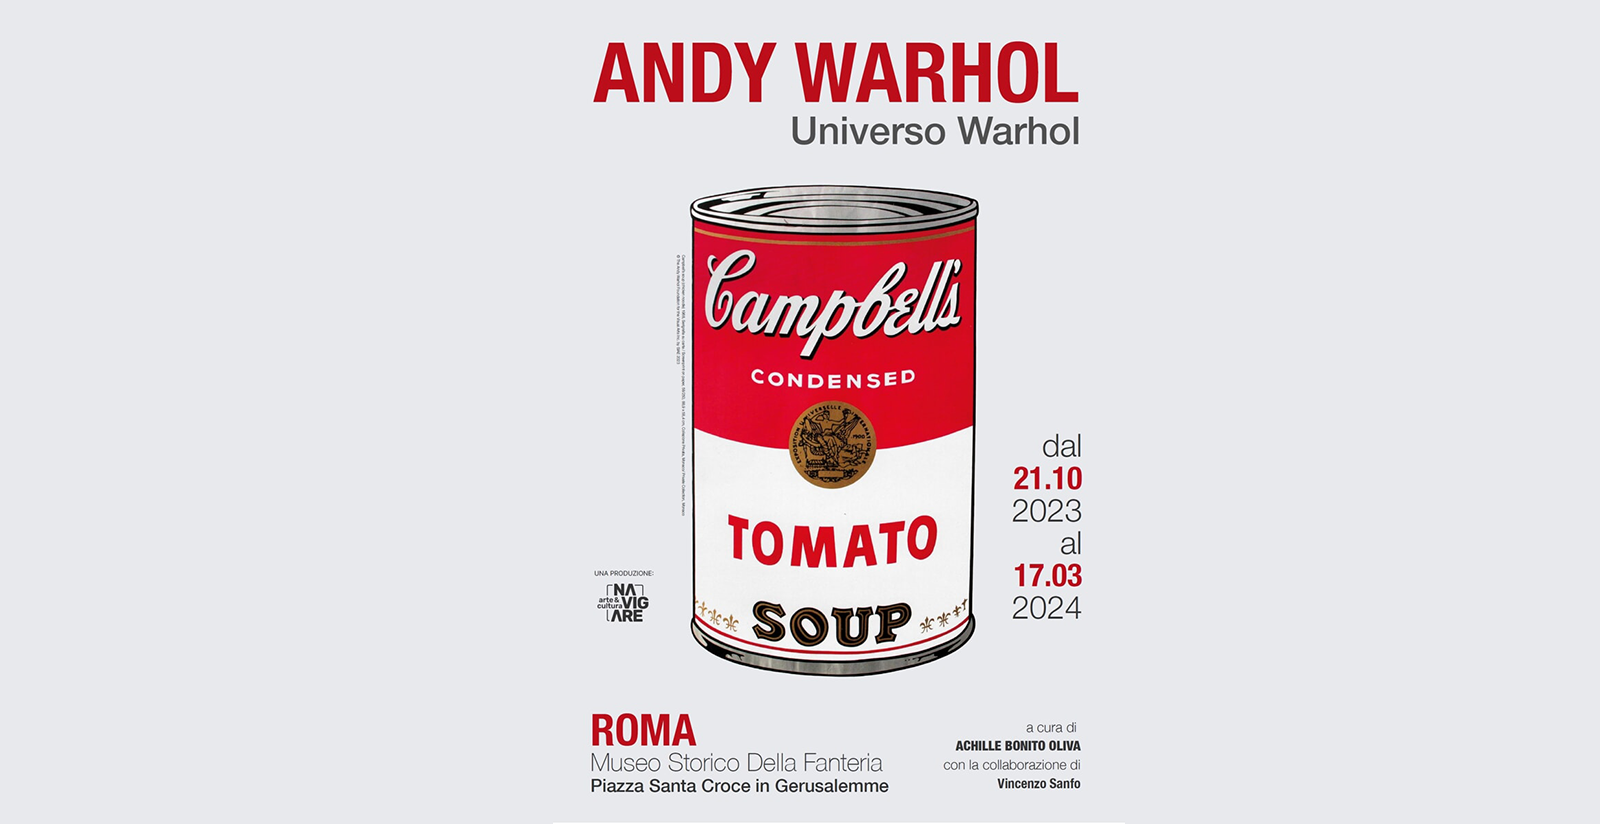 FH55 Hotels - La mostra Andy Warhol: Universo Warhol a Roma 1